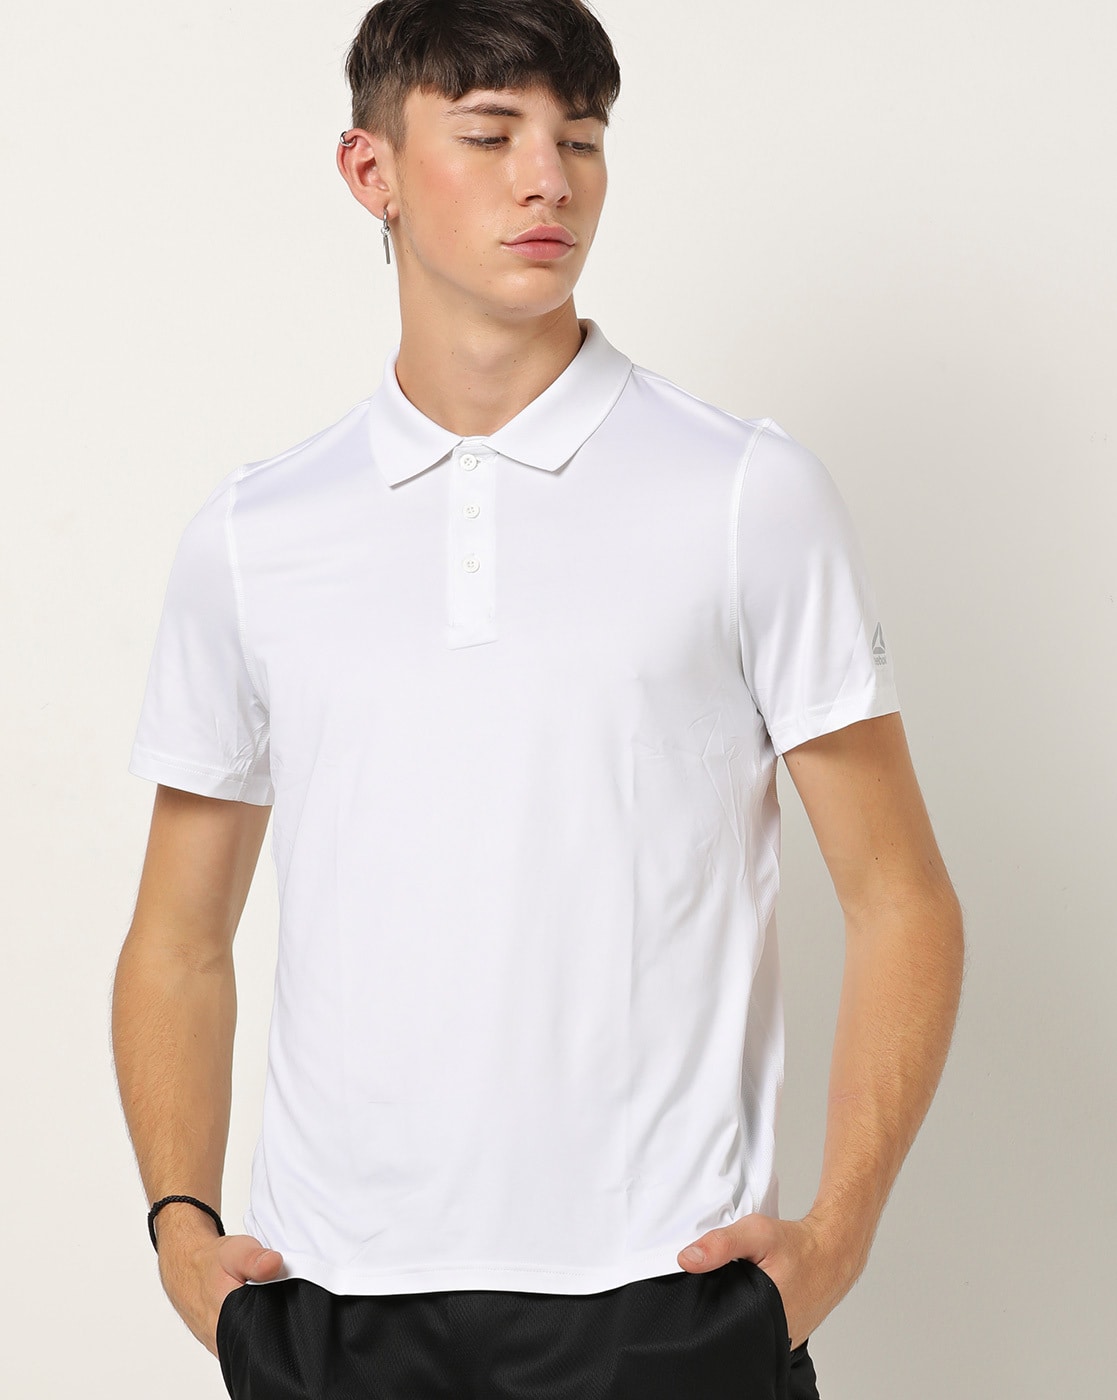 reebok white t shirt online